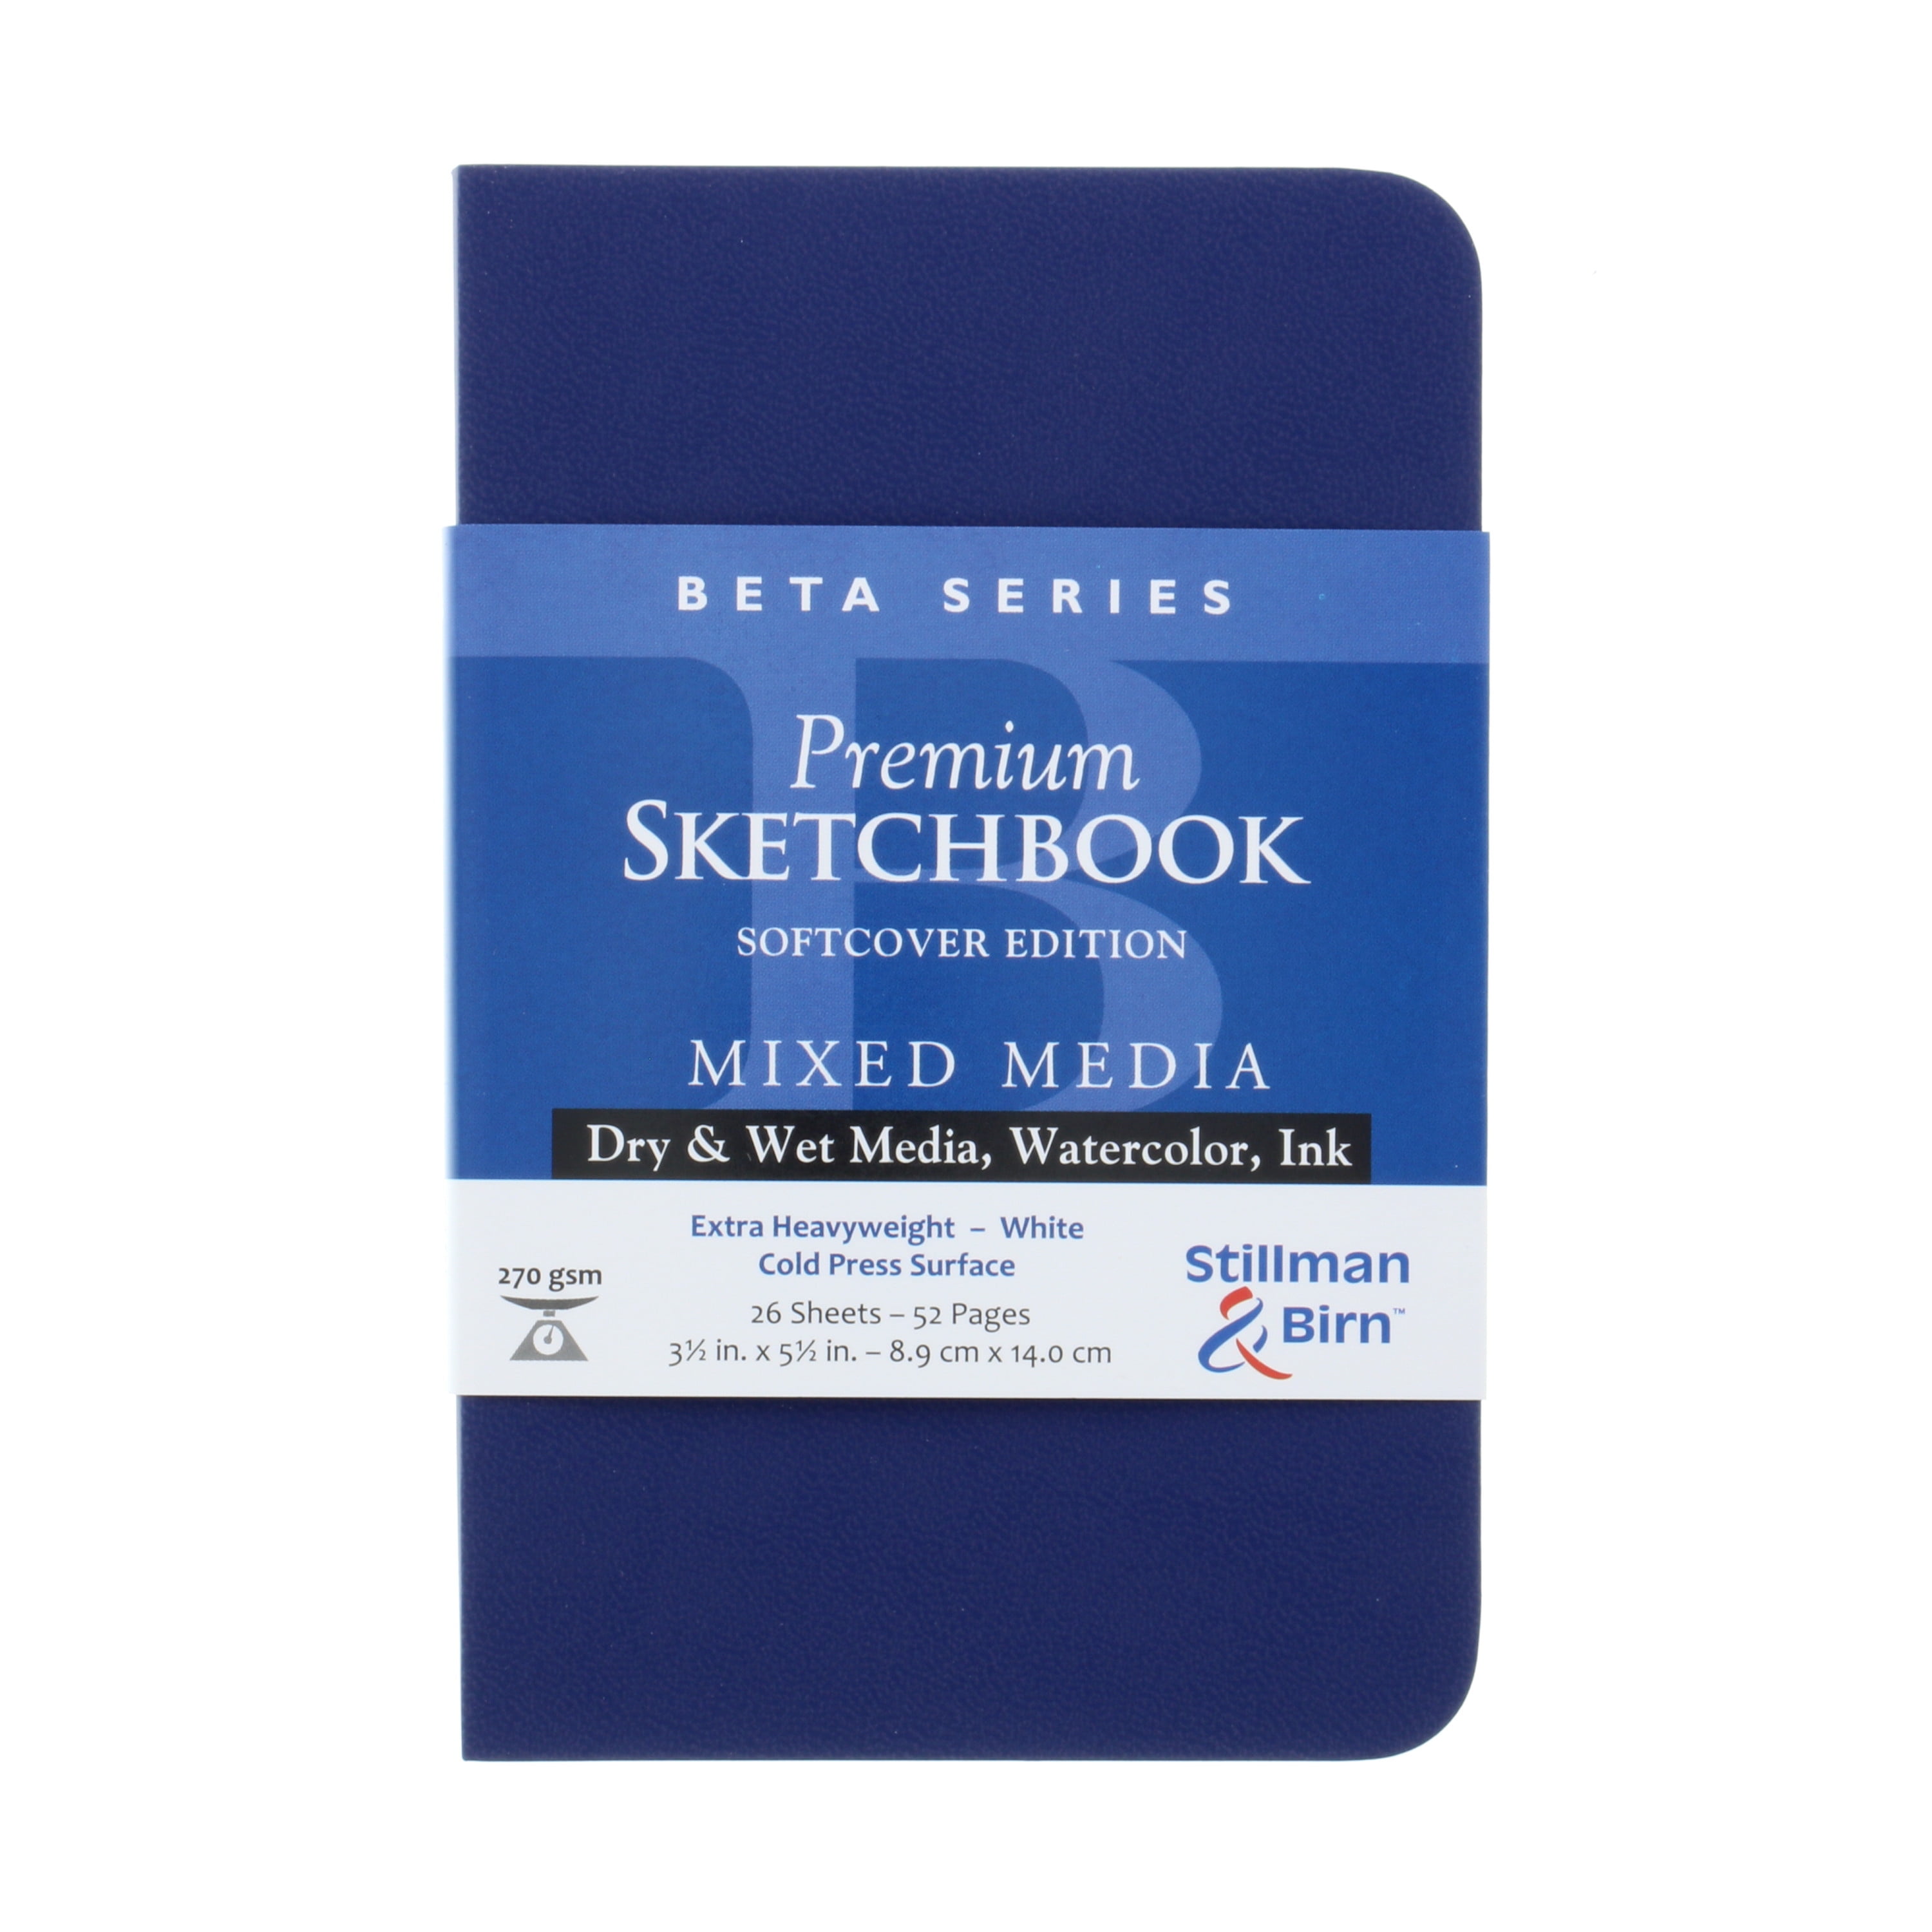 Cold Press Surface White Paper 270 gsm Extra Heavyweight Stillman & Birn Beta Series Softcover Sketchbook 8 x 10 